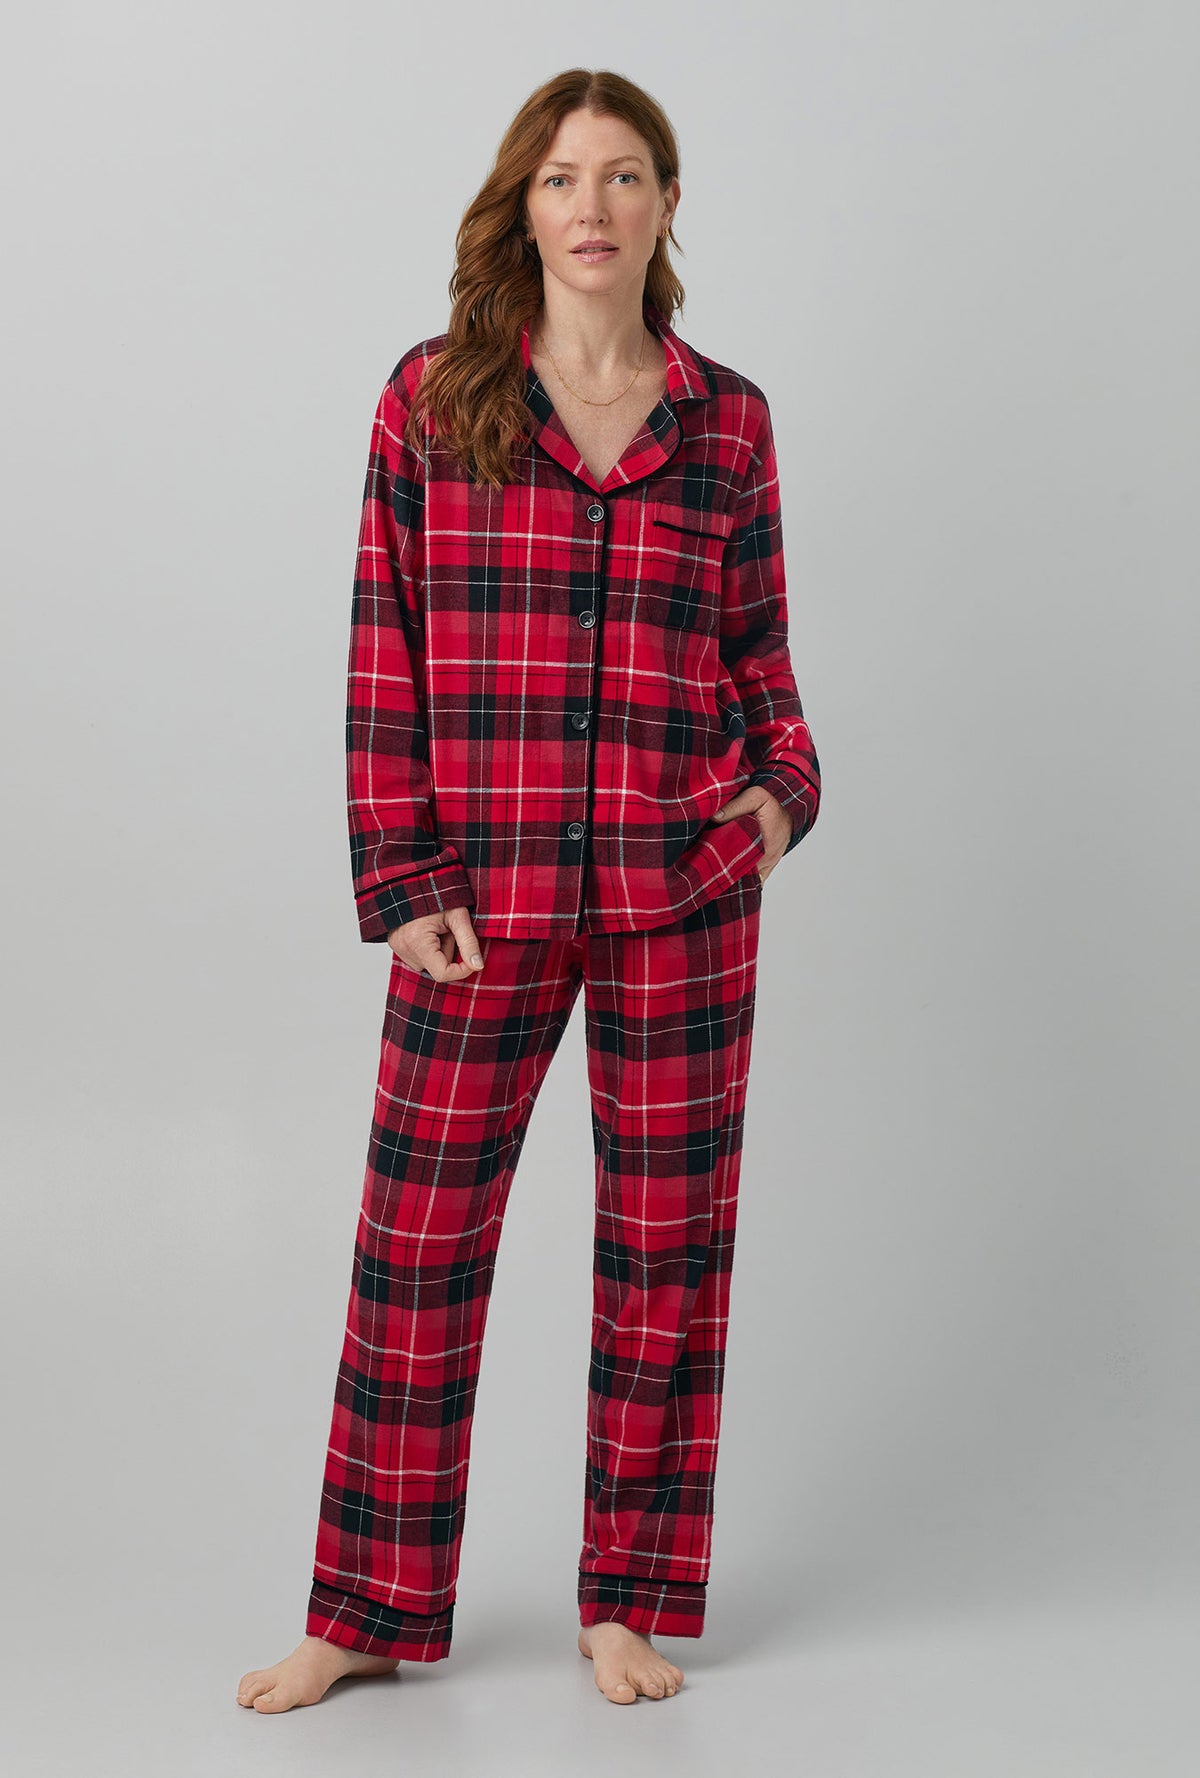 Company Cotton Family Flannel Navy Red Plaid Women's Medium Red/Navy Long  Sleeve Pajama Short Set